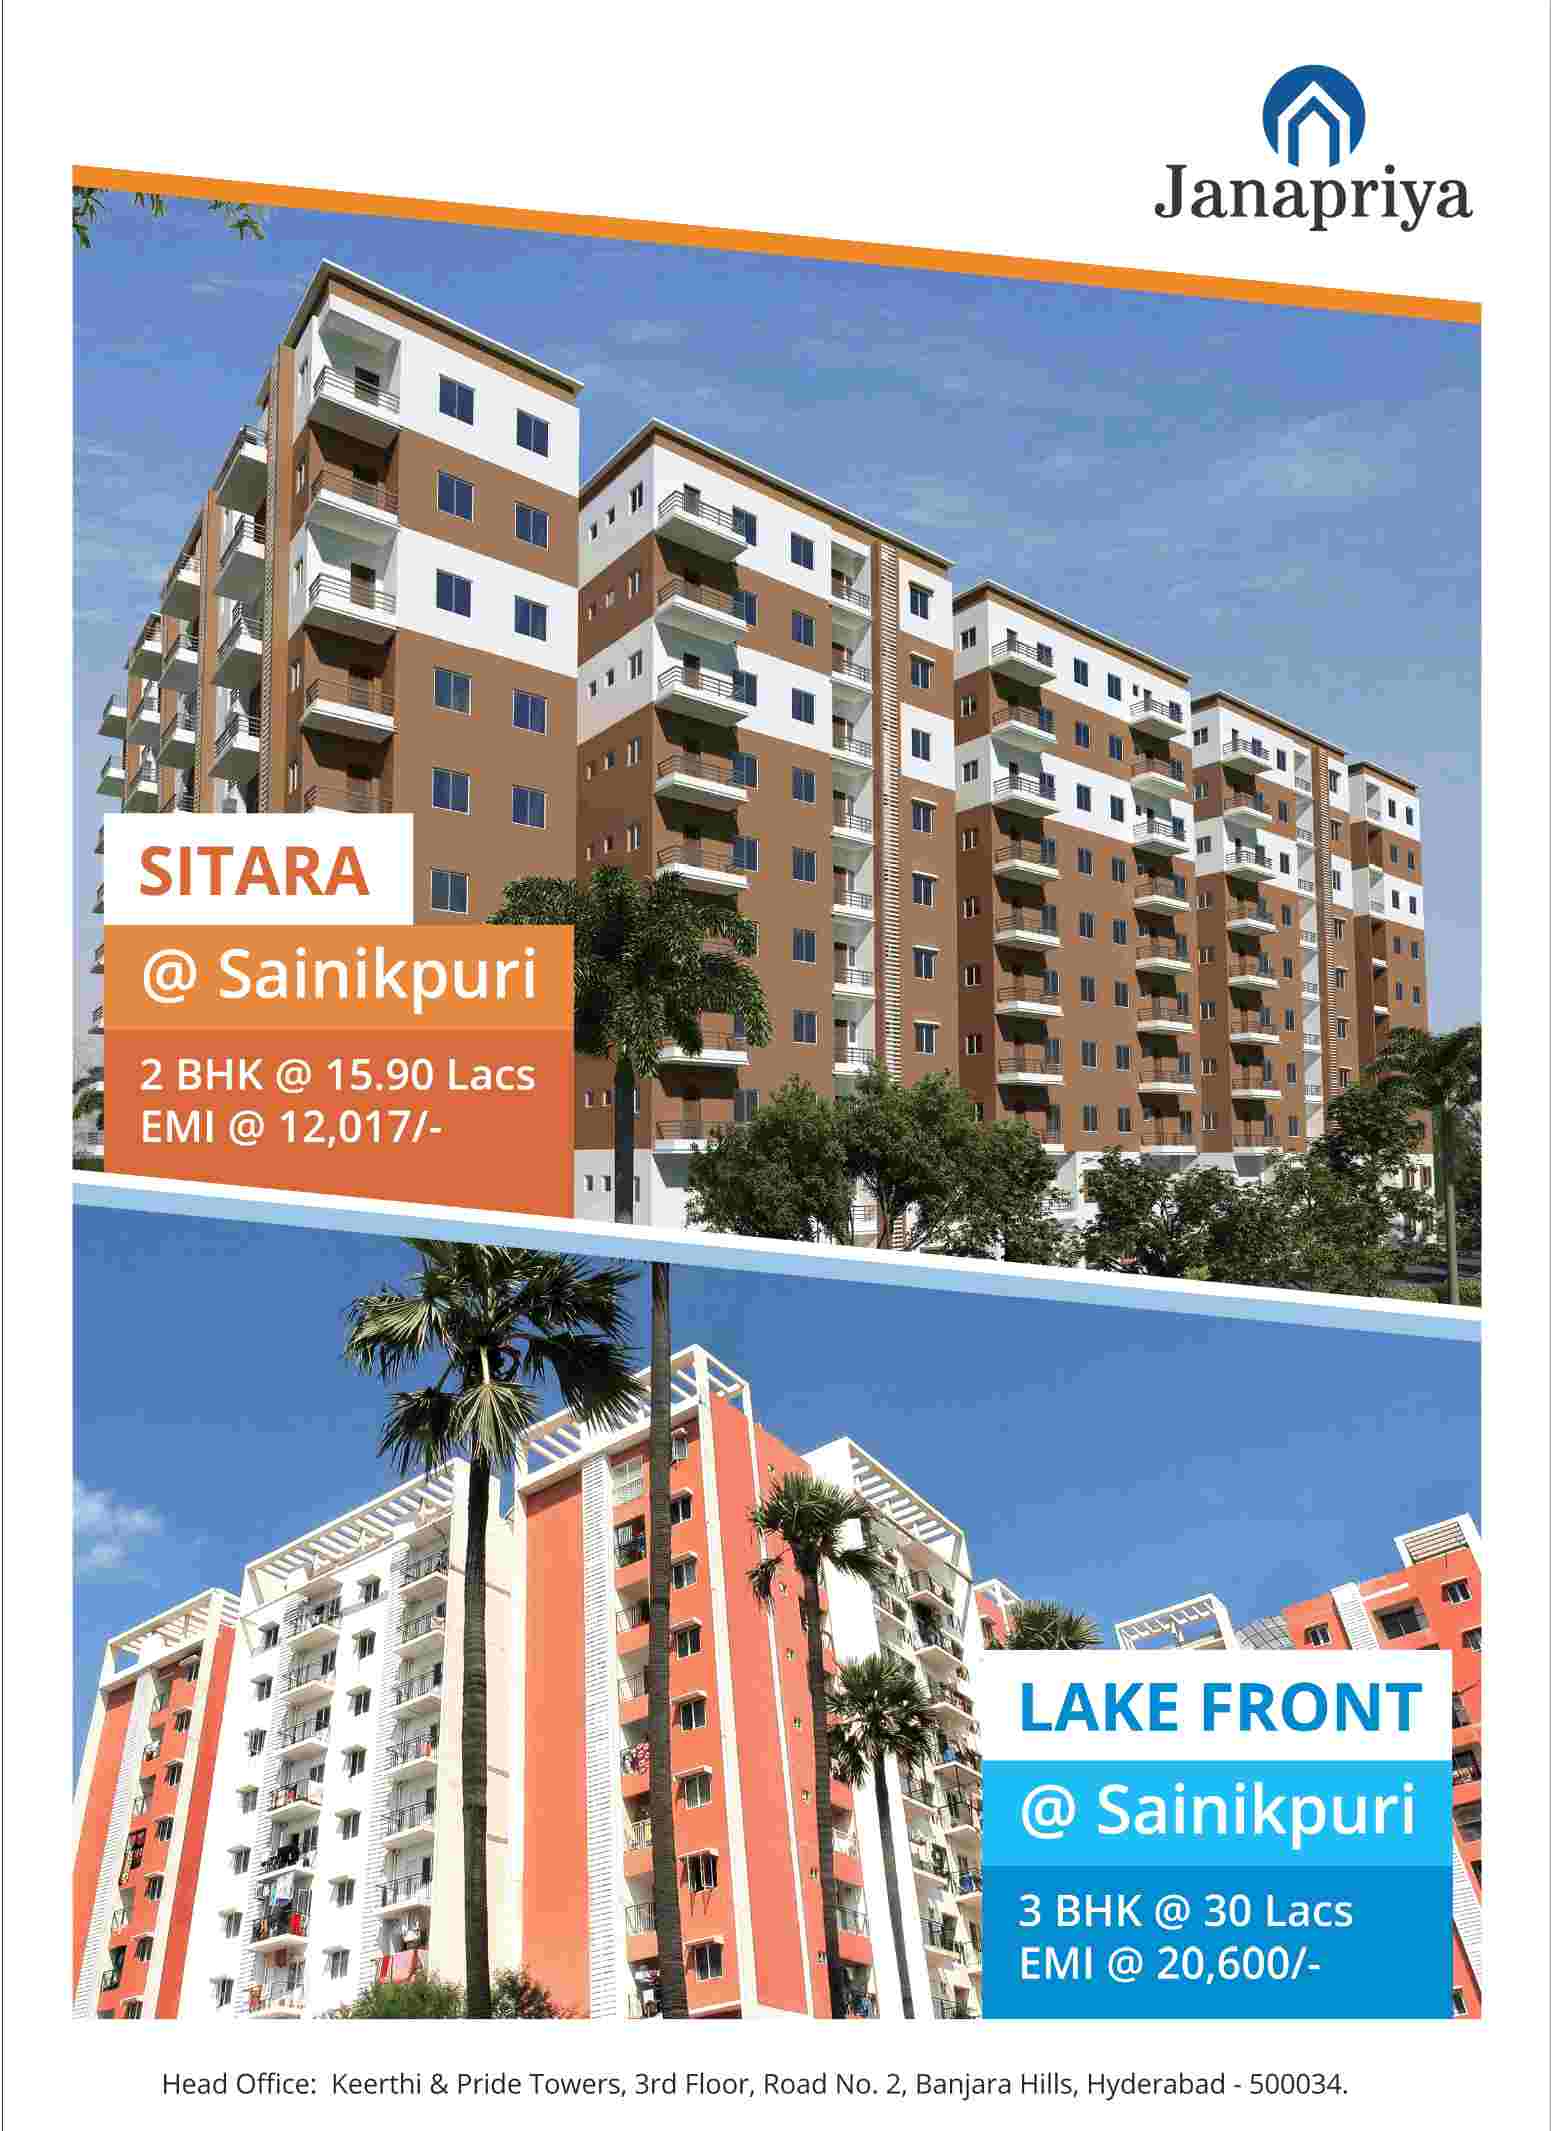 Invest at Janapriya properties in Hyderabad Update